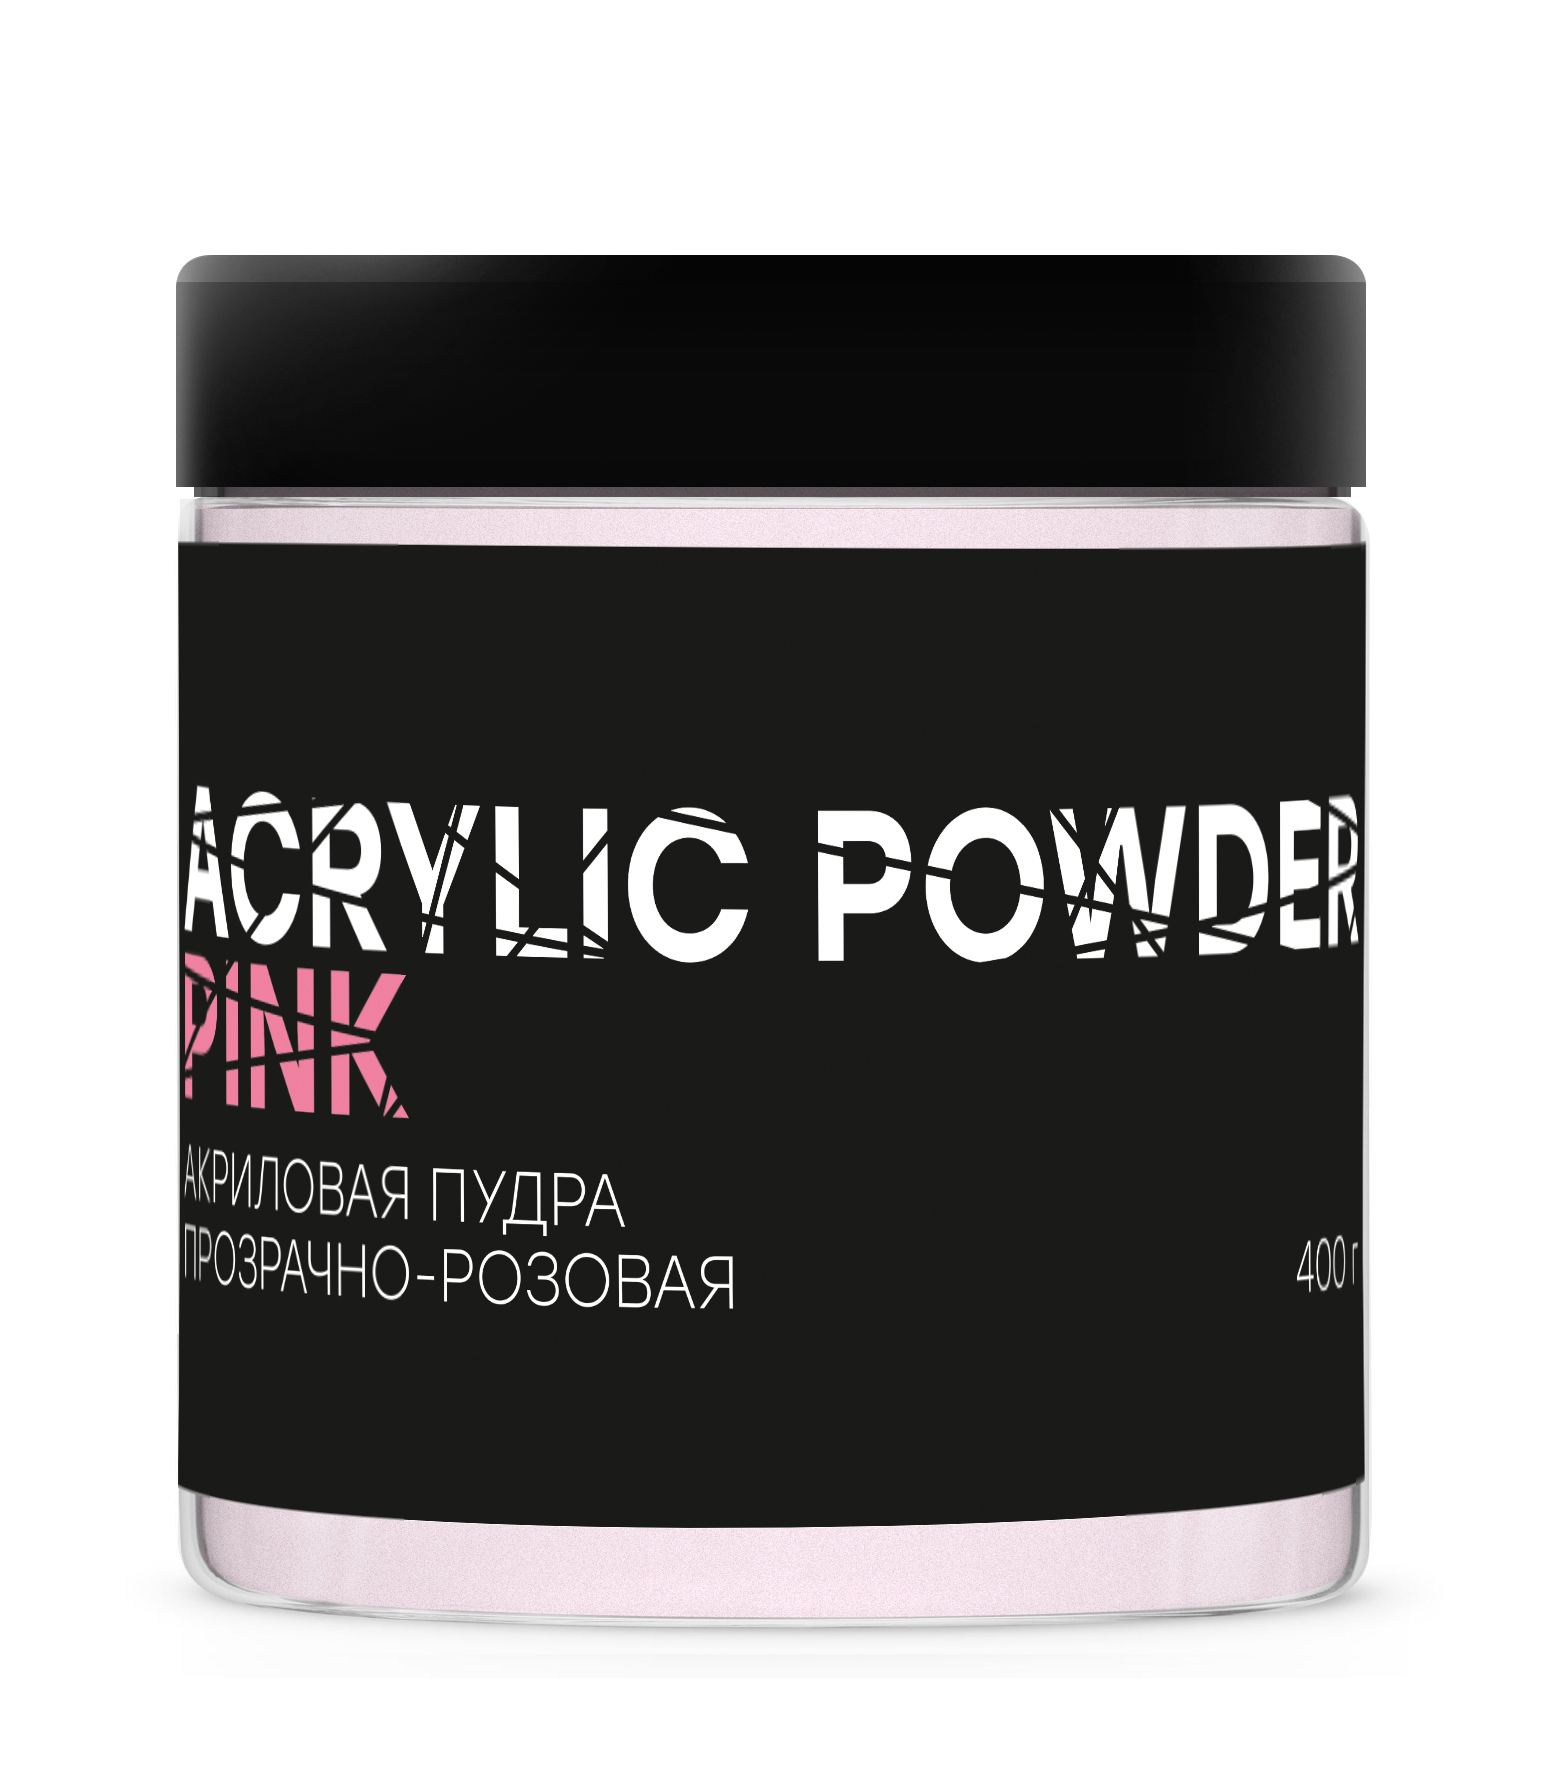 Акриловая пудра InGarden Acrylic Powder Pink прозрачно-розовая, 400 г акриловая пудра белая acrylic powder classic white 100 г